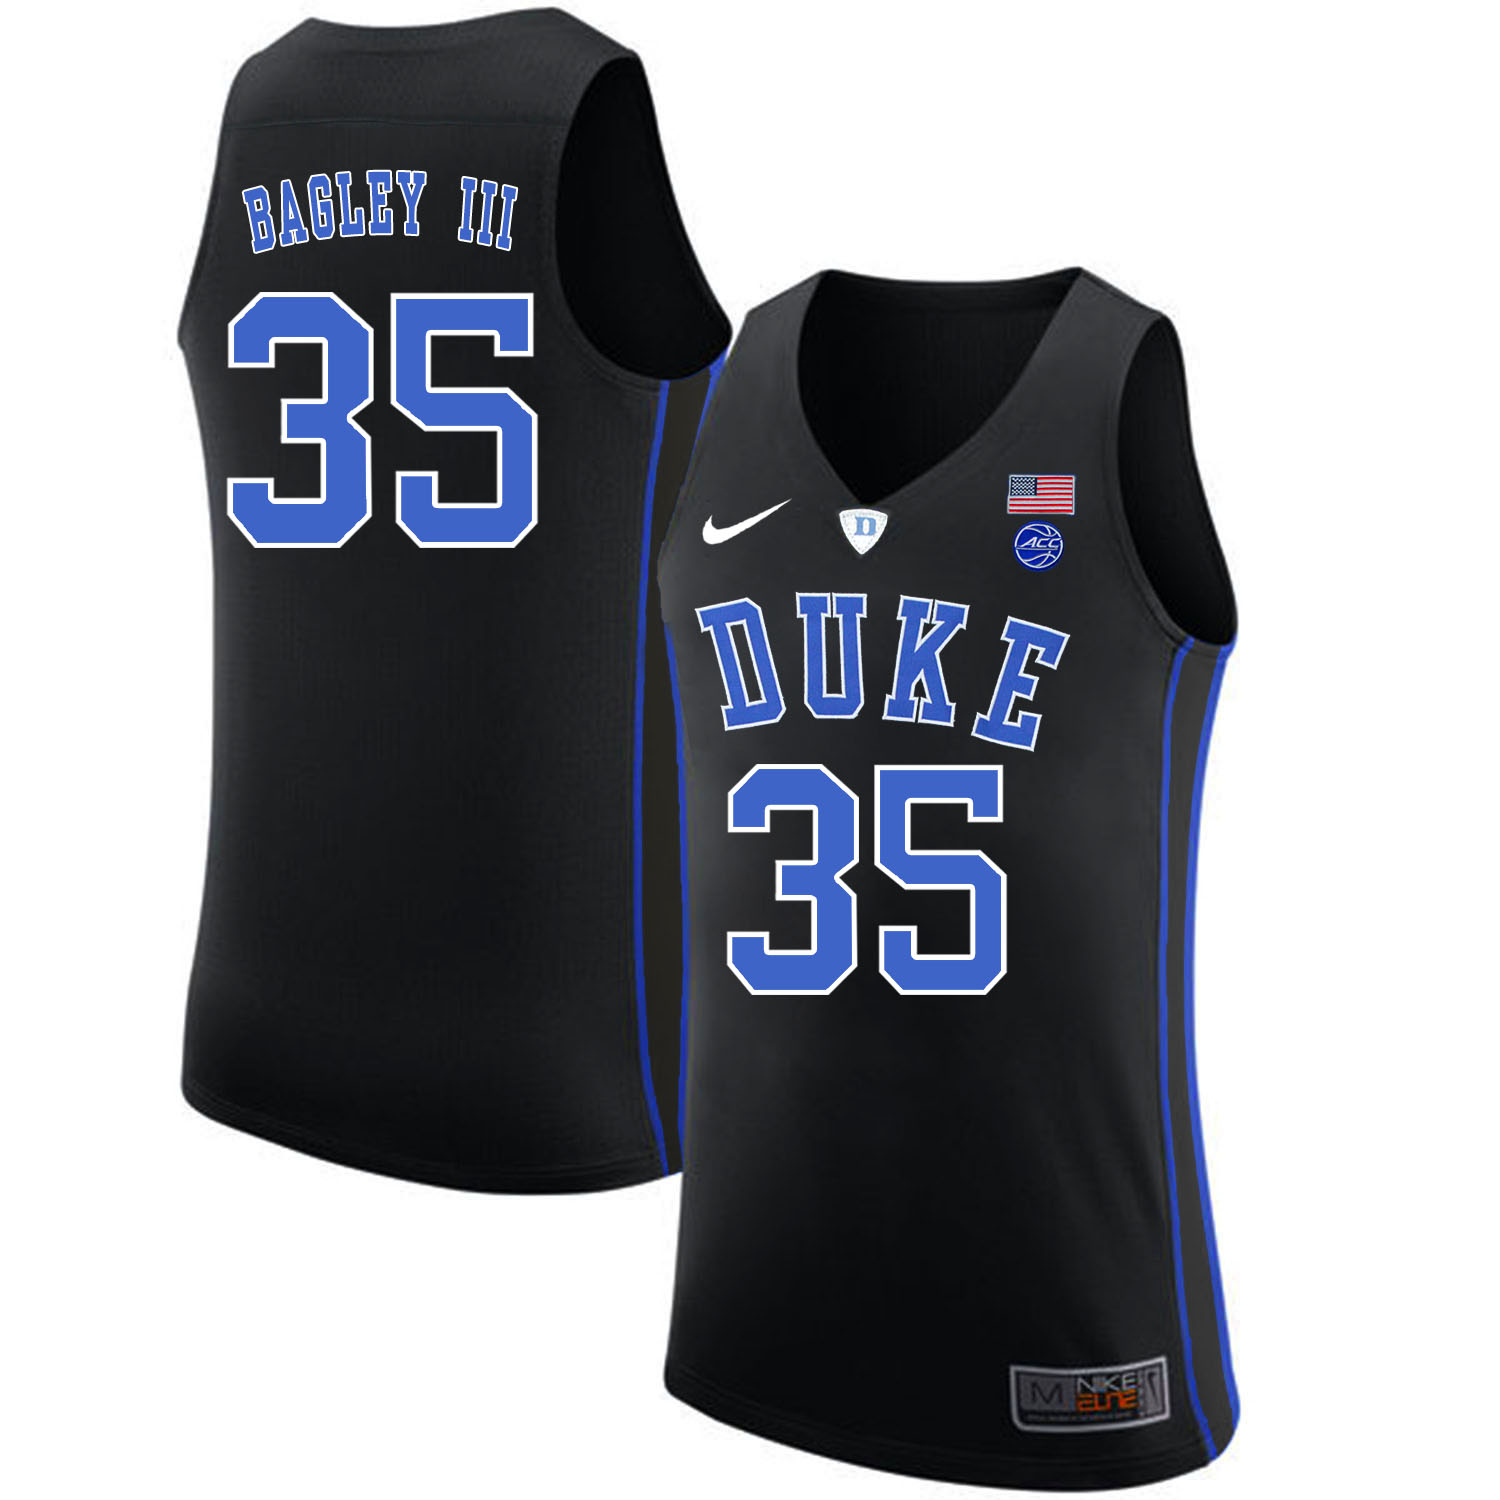 Duke Blue Devils 35 Marvin Bagley III Black Nike College Basketball Jersey